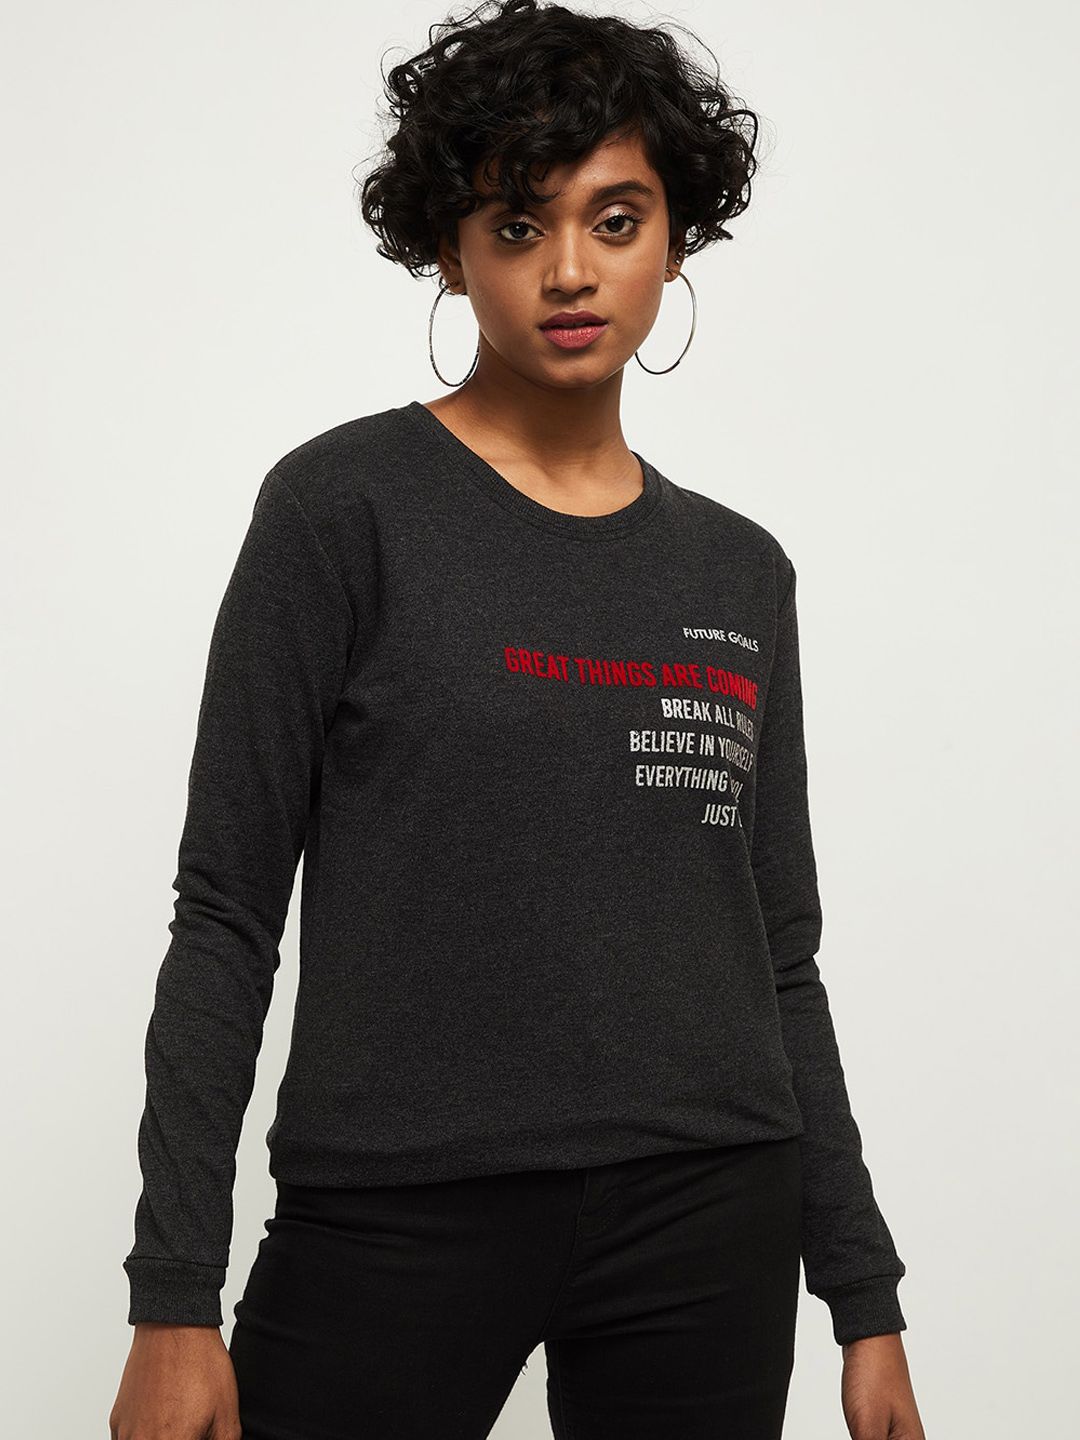 max Women Black Printed Round Neck Sweatshirt Price in India